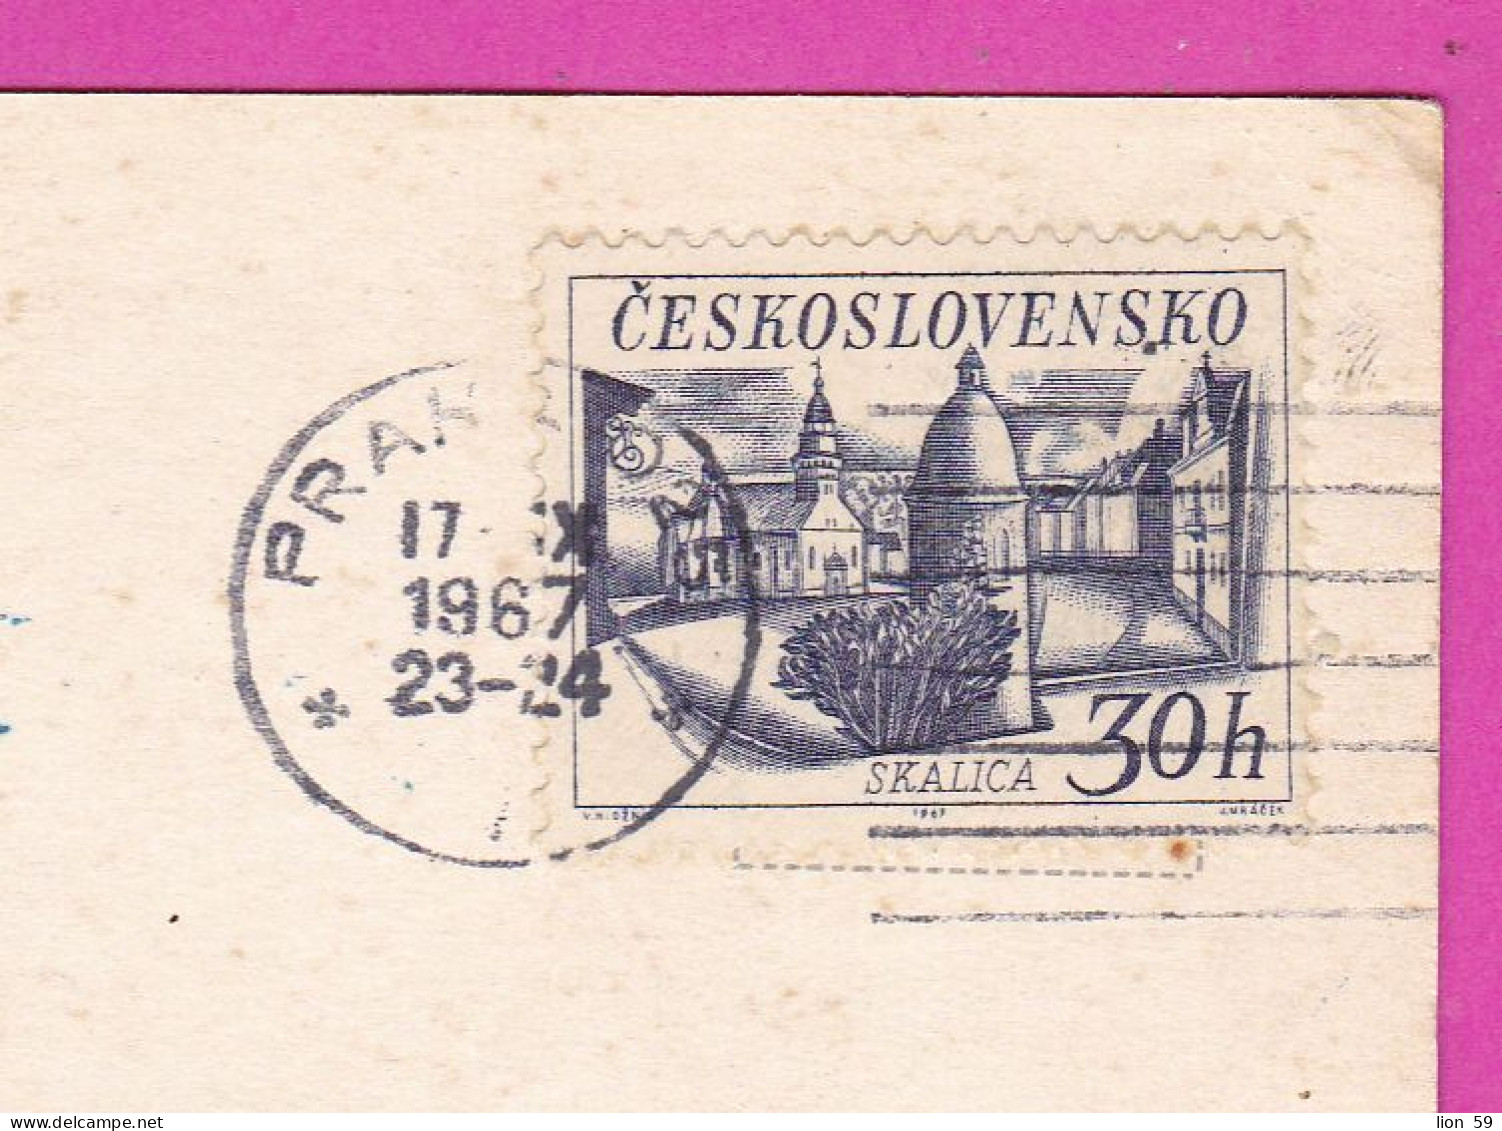 294822 / Czechoslovakia PRAHA Karluv Most Hradcany Prazske Mosty PC 1967 USED 30h Czech Towns - Skalica - Lettres & Documents